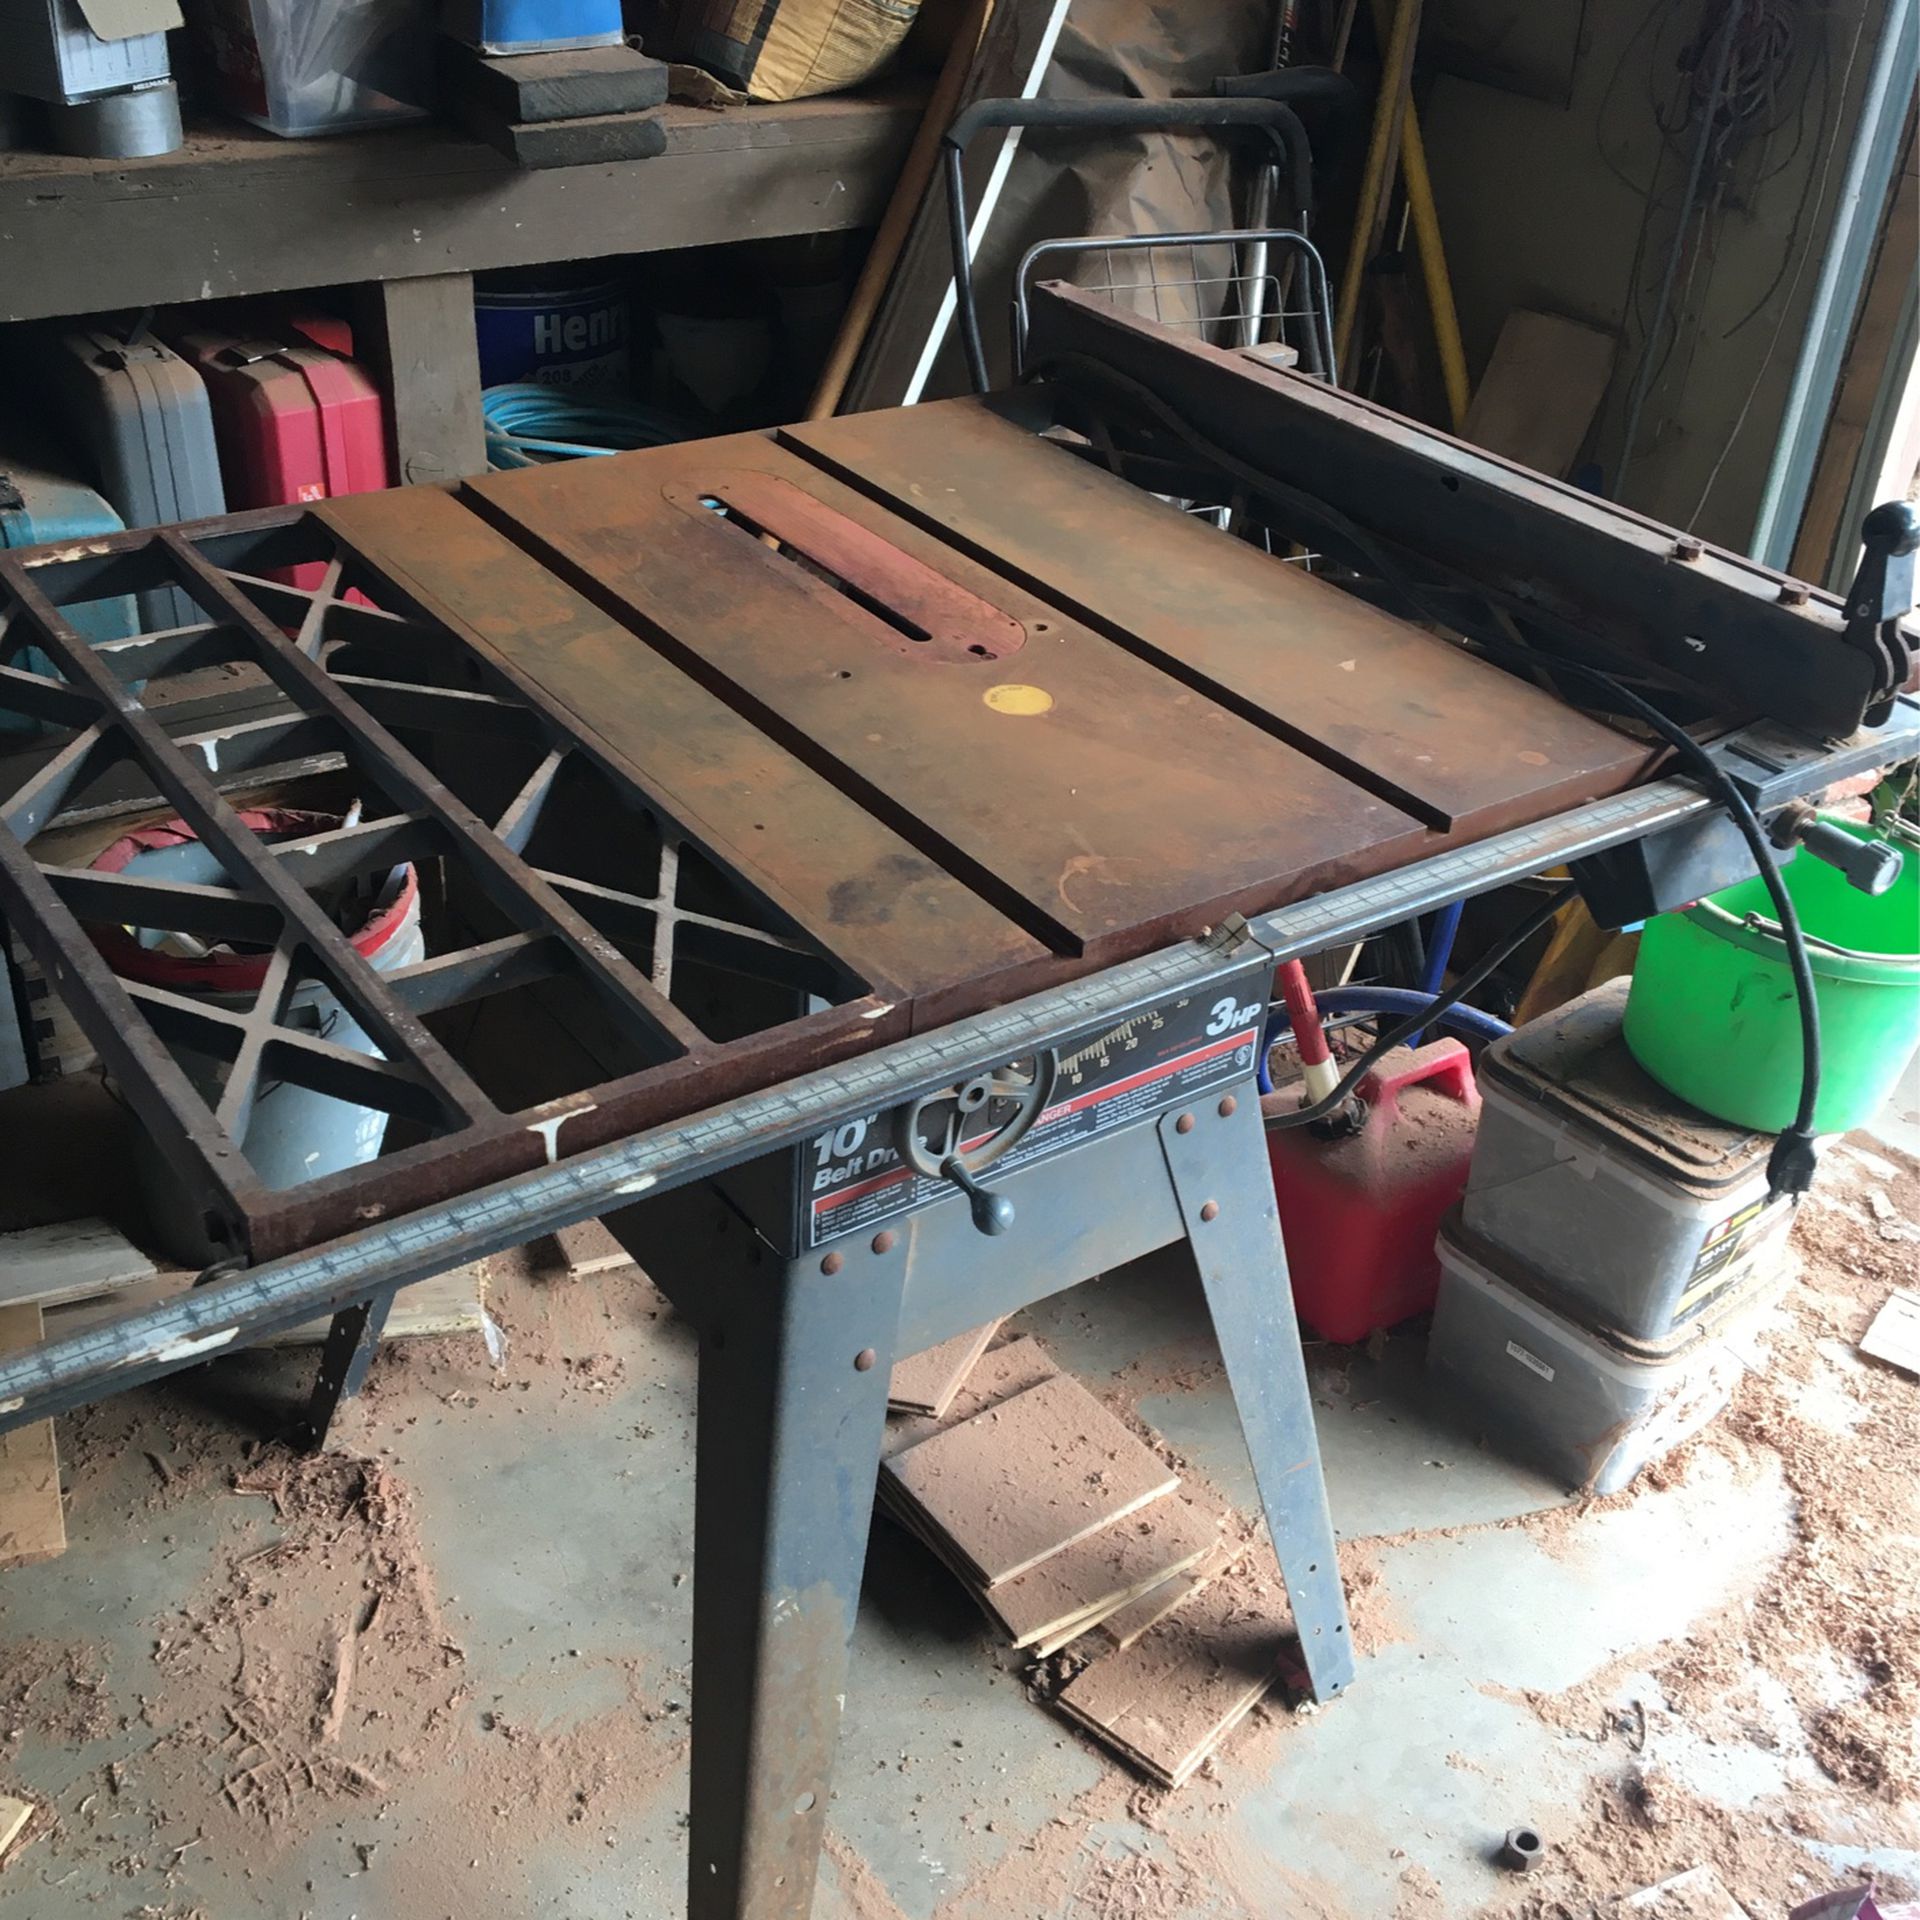 Craftsman 10” Table Saw